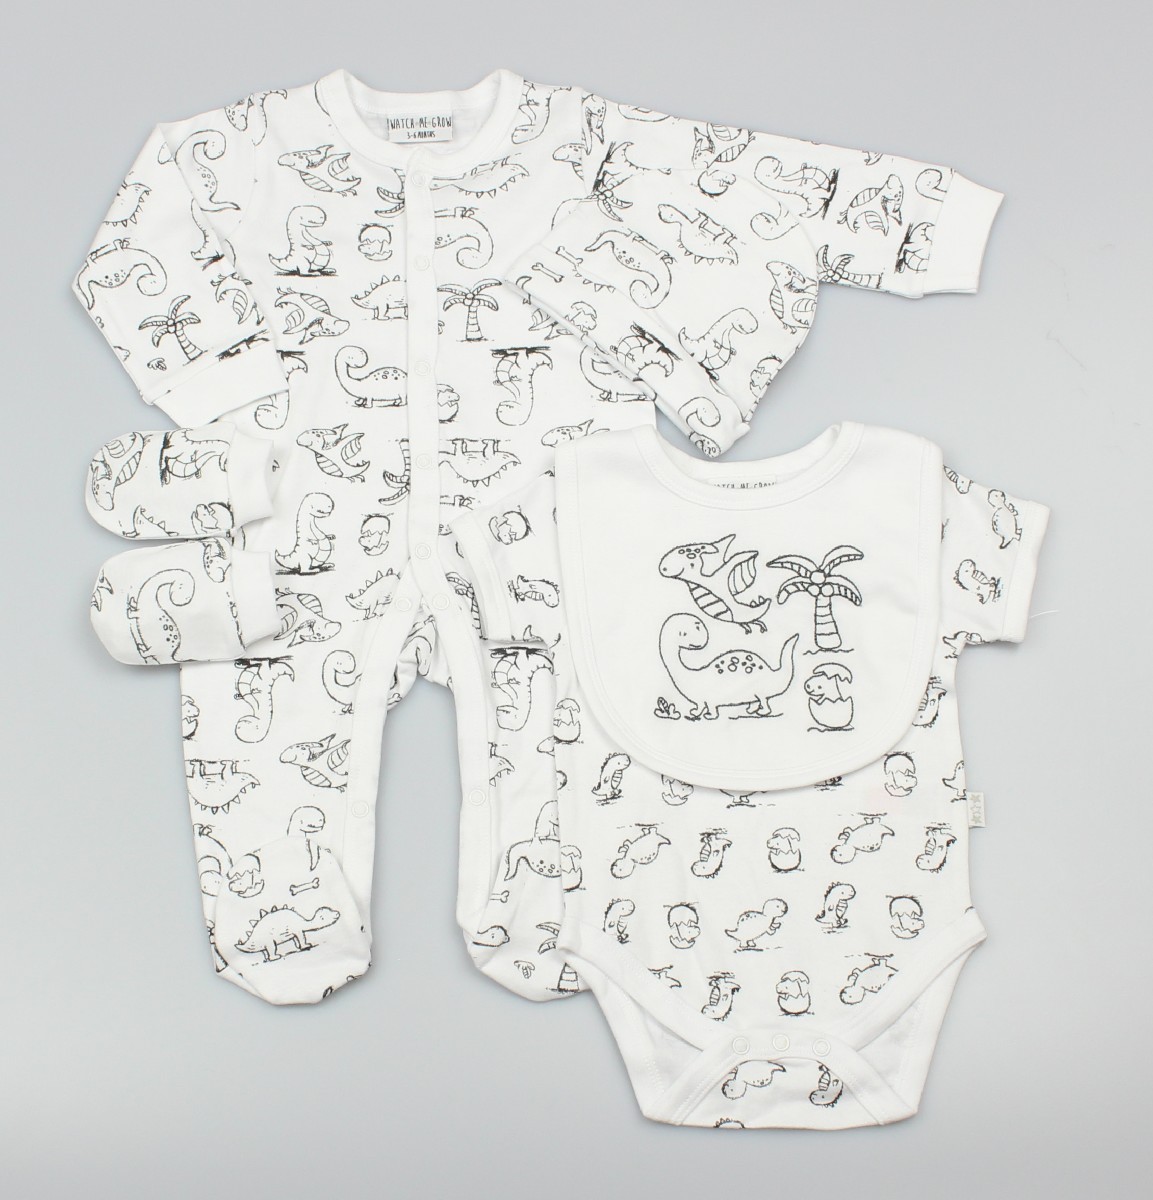 Baby 5pc Layette Gift Set - Sleepsuit, Bodysuit, Bib, Cap And Mitts